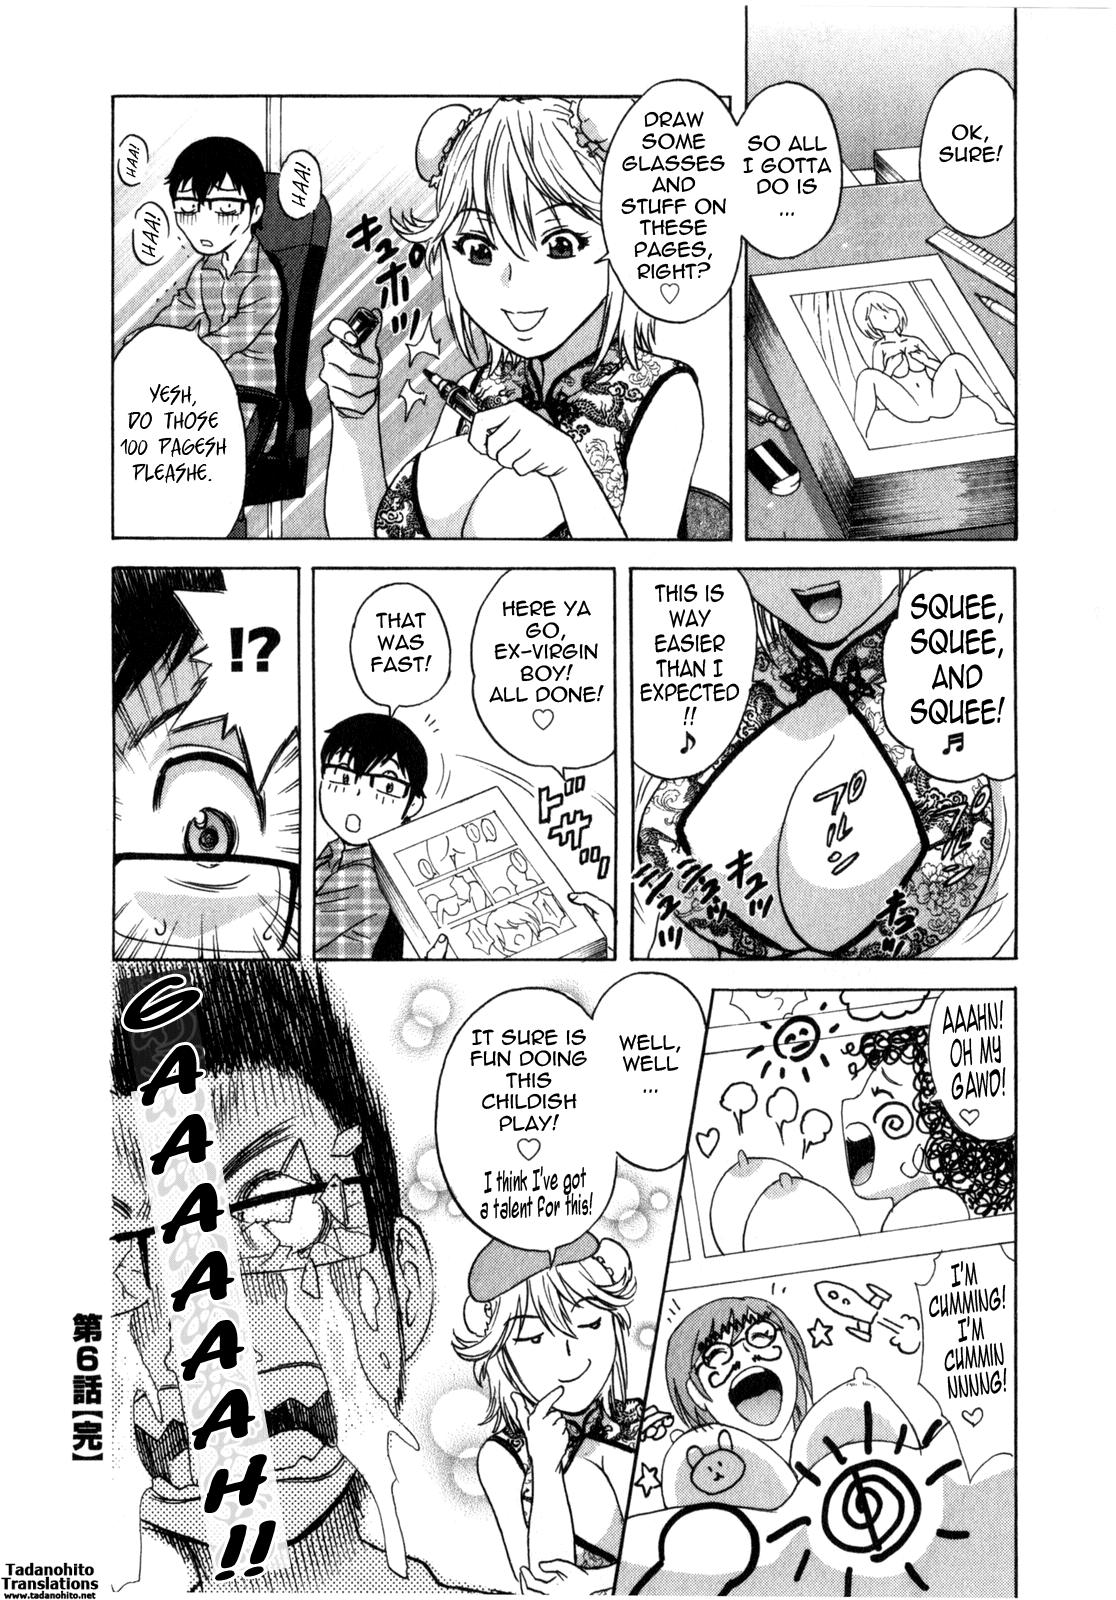 [Hidemaru] Life with Married Women Just Like a Manga 3 - Ch. 1-8 [English] {Tadanohito} 124